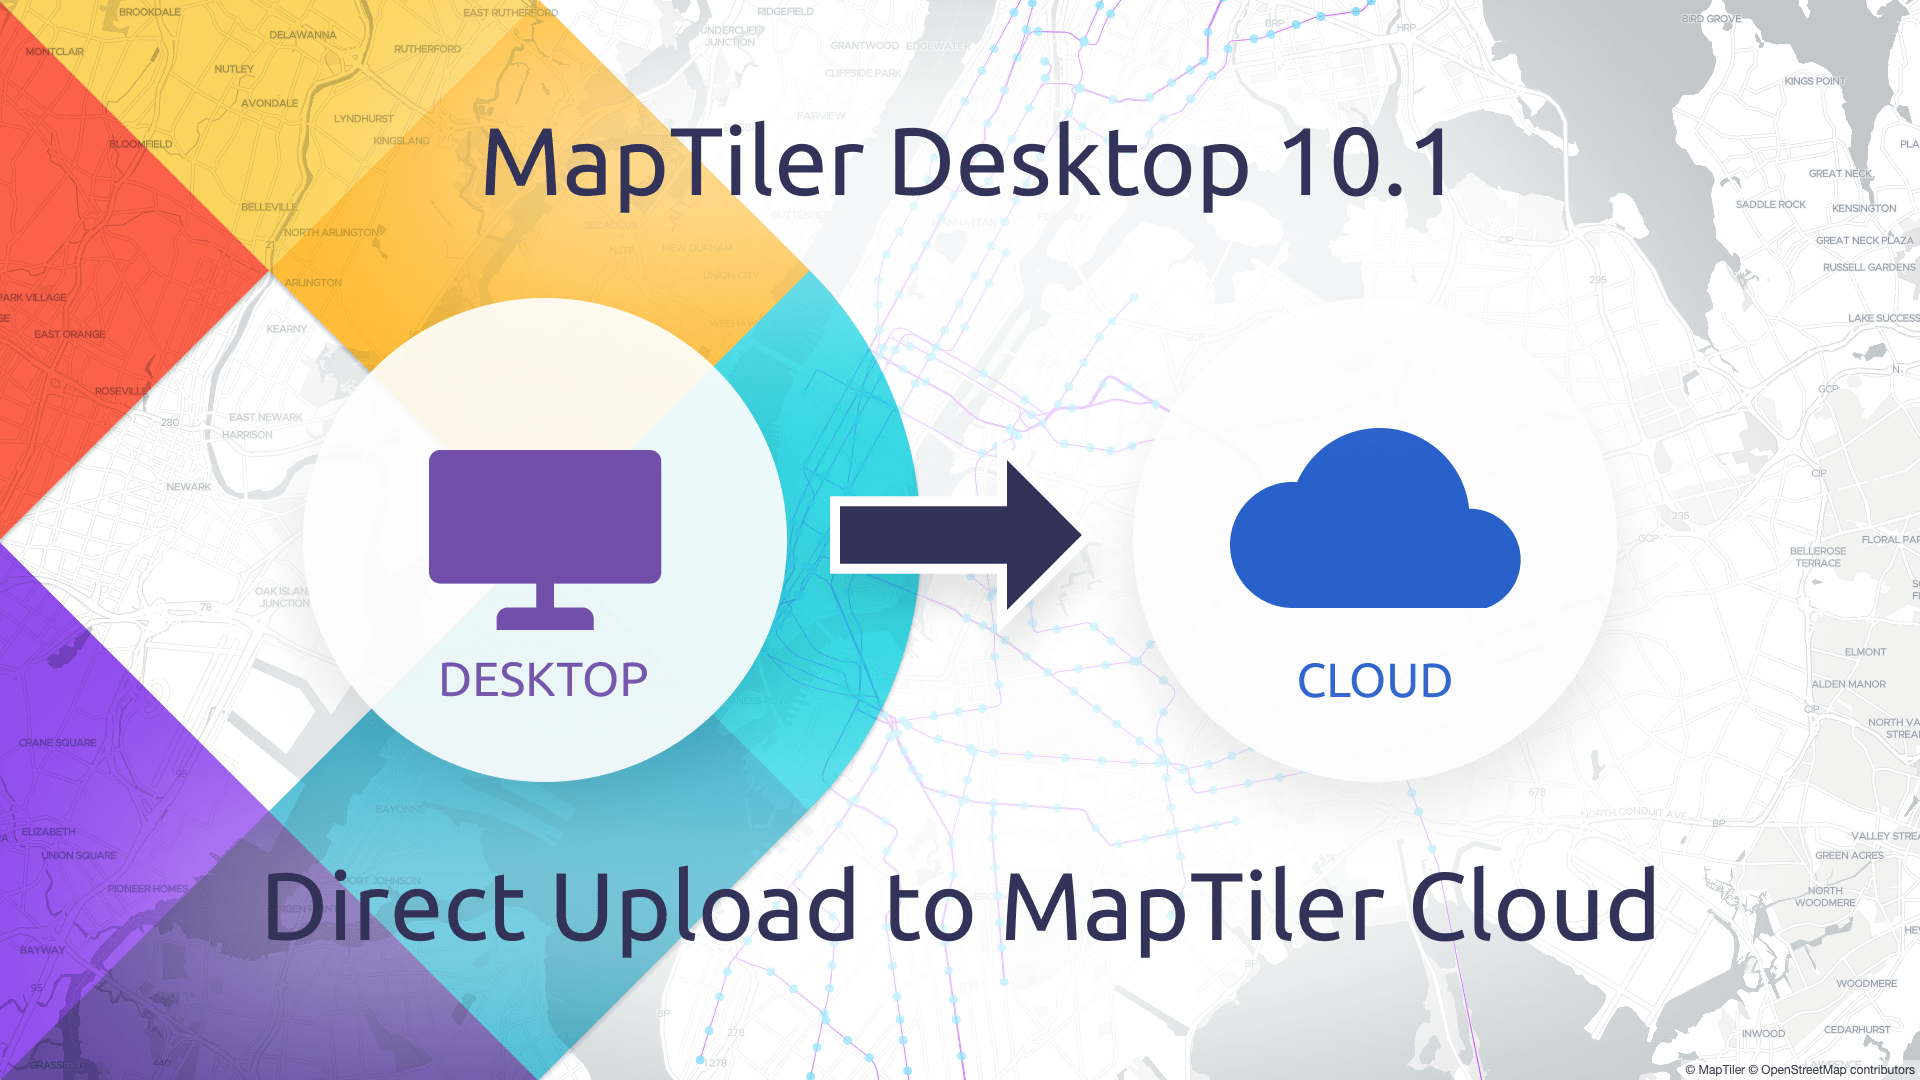 Caricare le mappe su Cloud con l'immagine di MapTiler Desktop 10.1